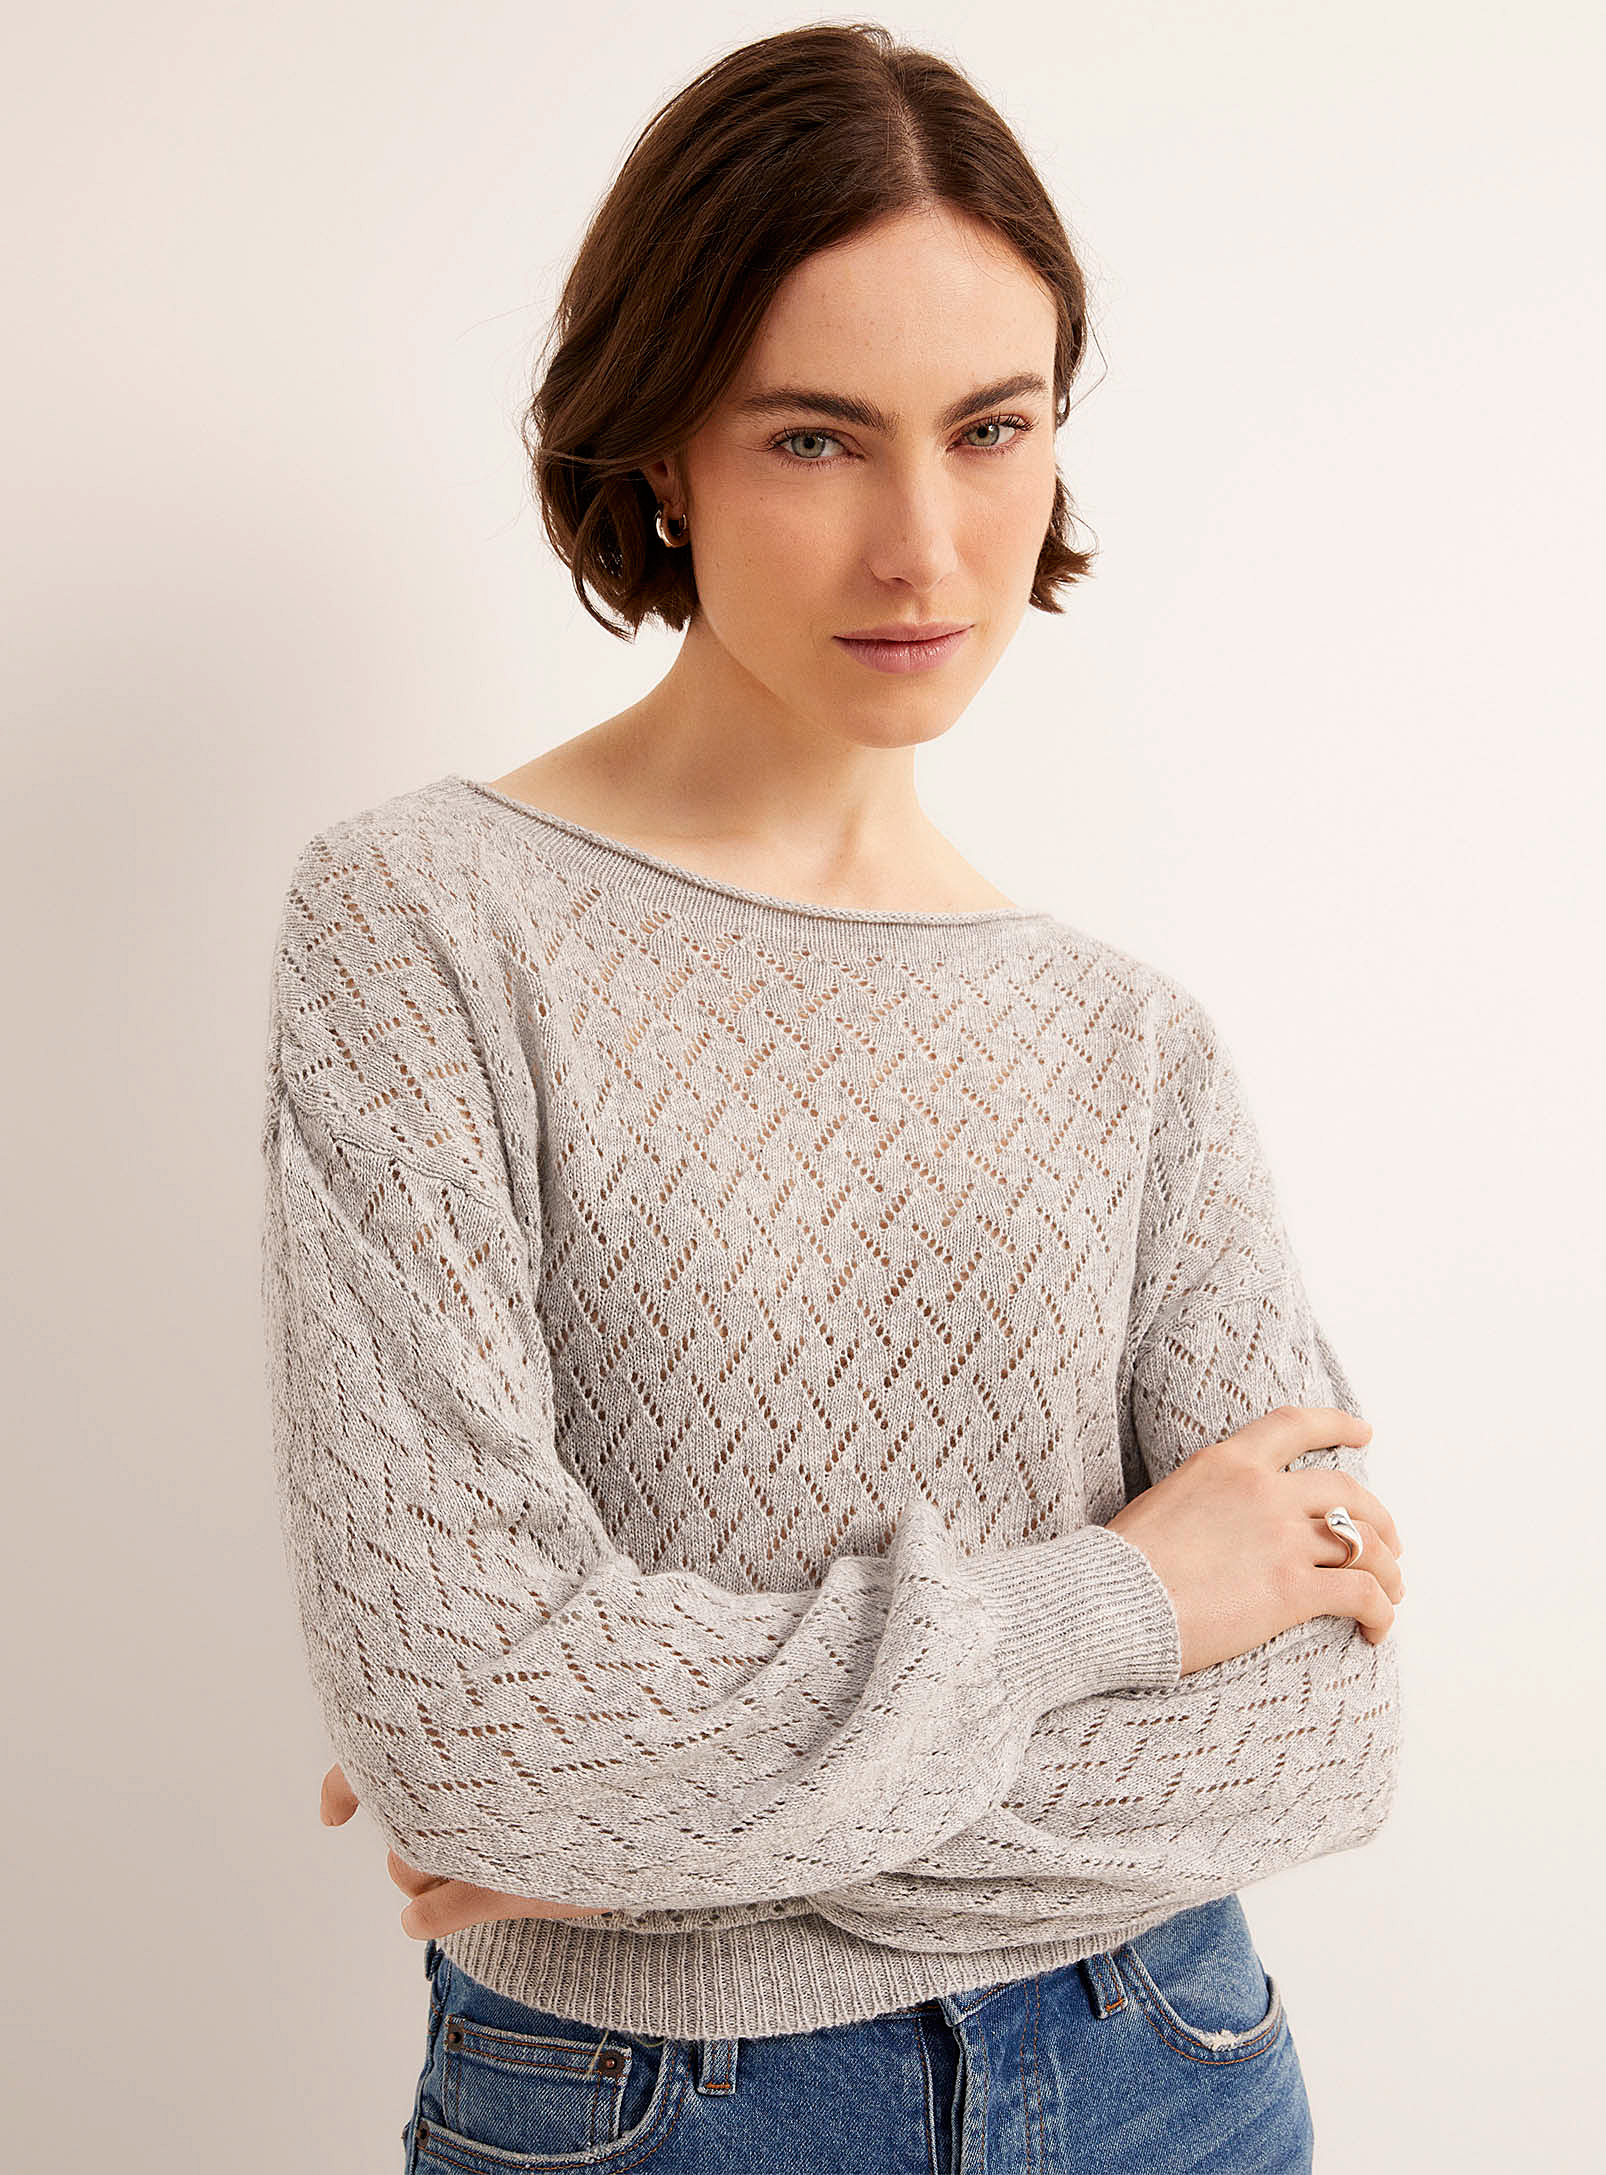 Contemporaine Touch Of Cashmere Openwork Sweater In Gray